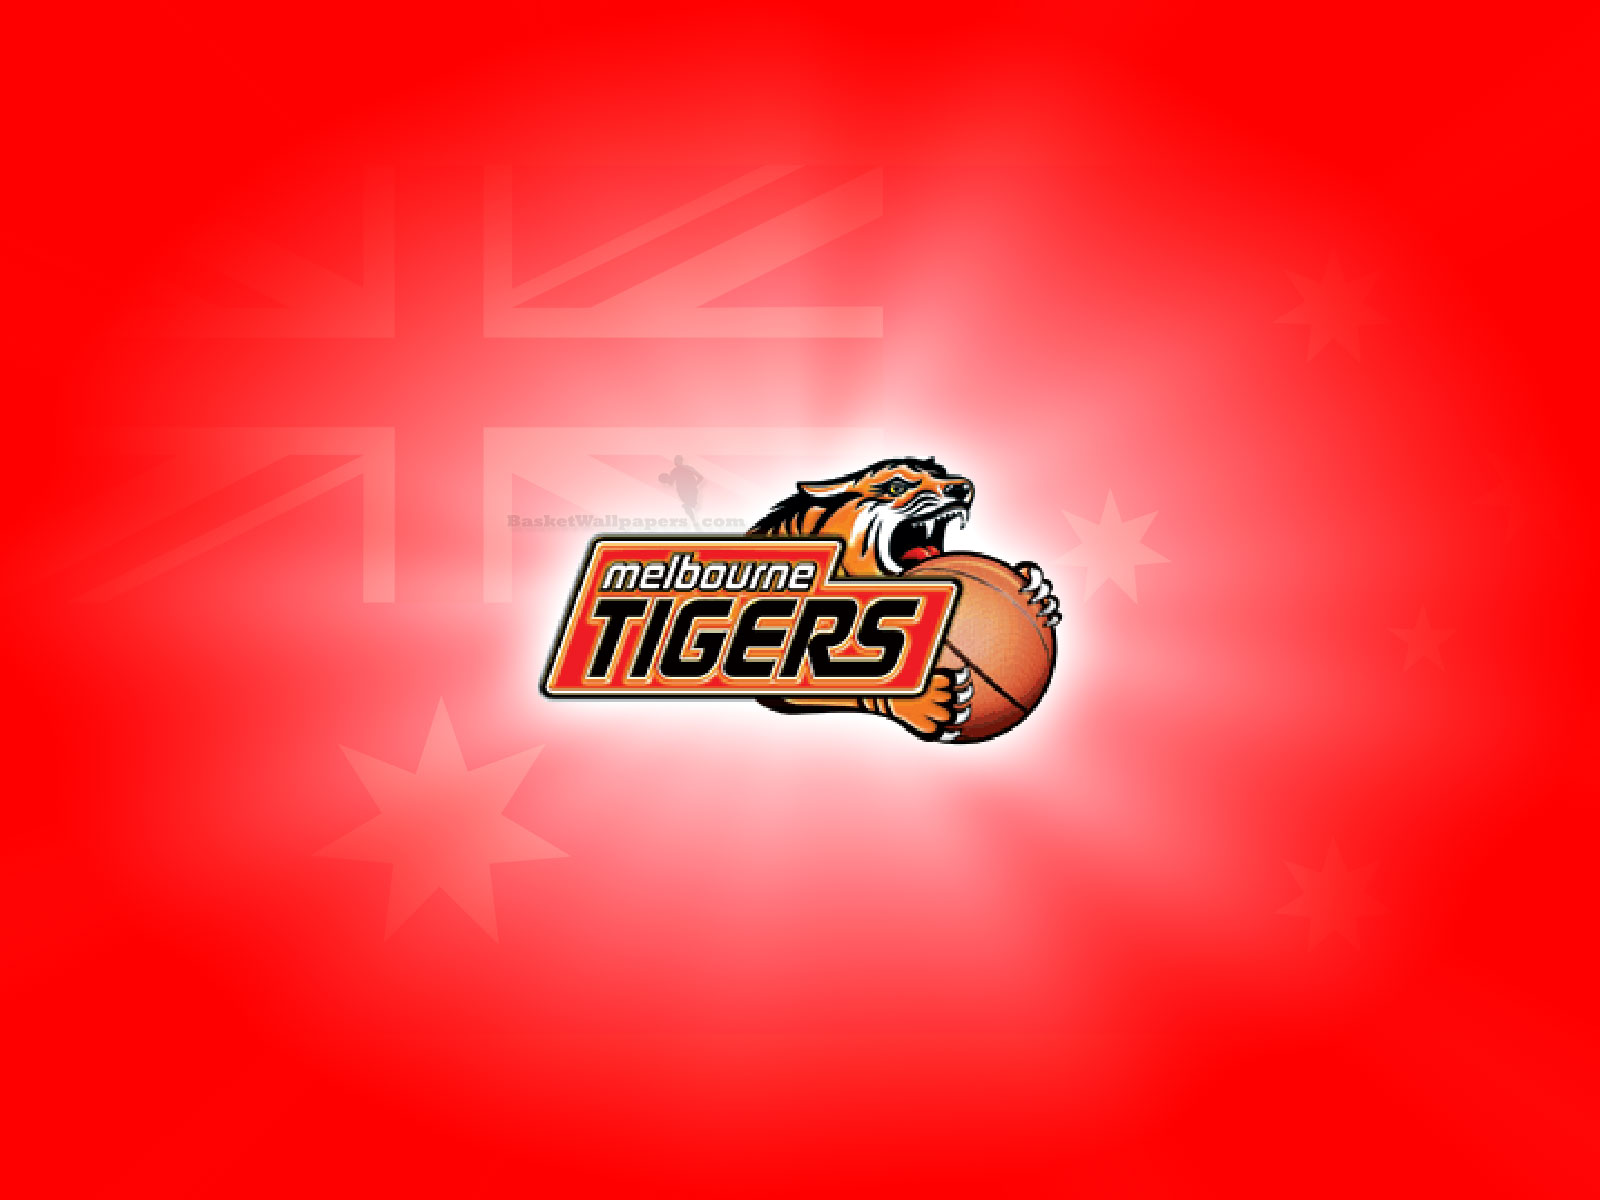 Baixar papel de parede para celular de Tigres De Melbourne, Basquetebol, Esportes gratuito.